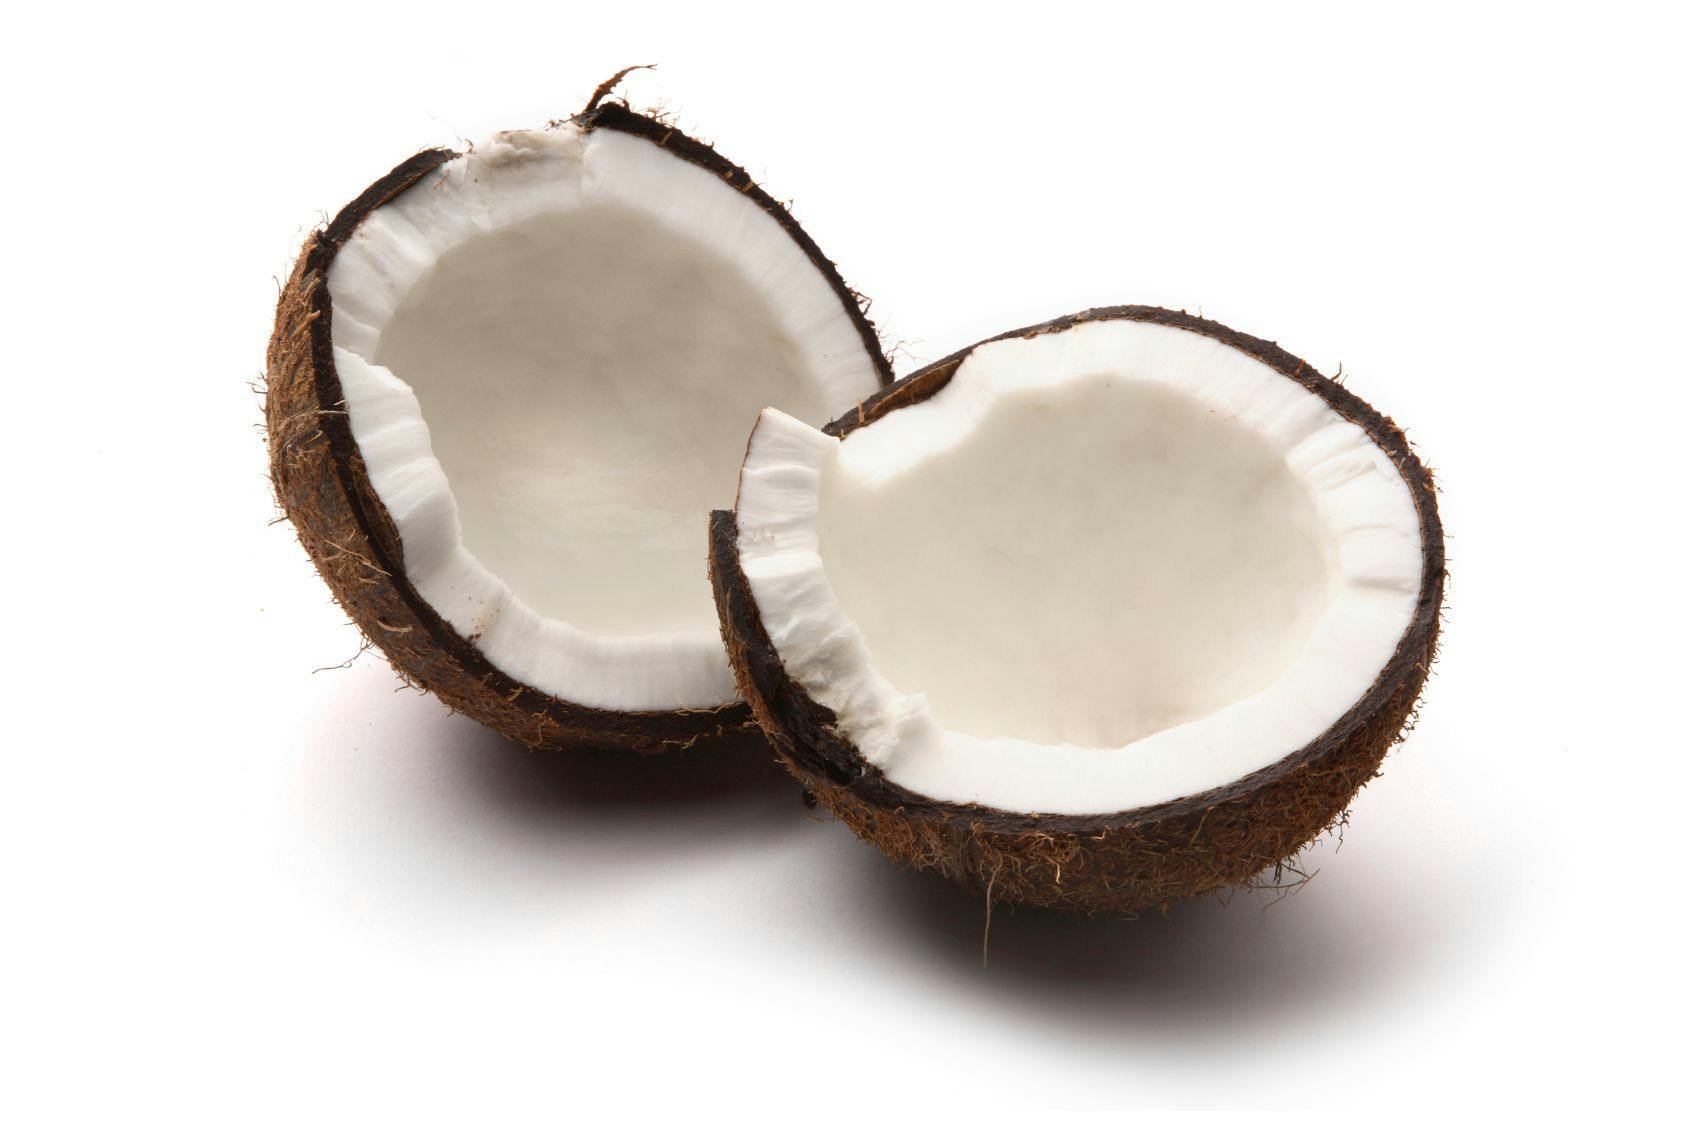 Coconut Oil for Atopic Dermatitis?